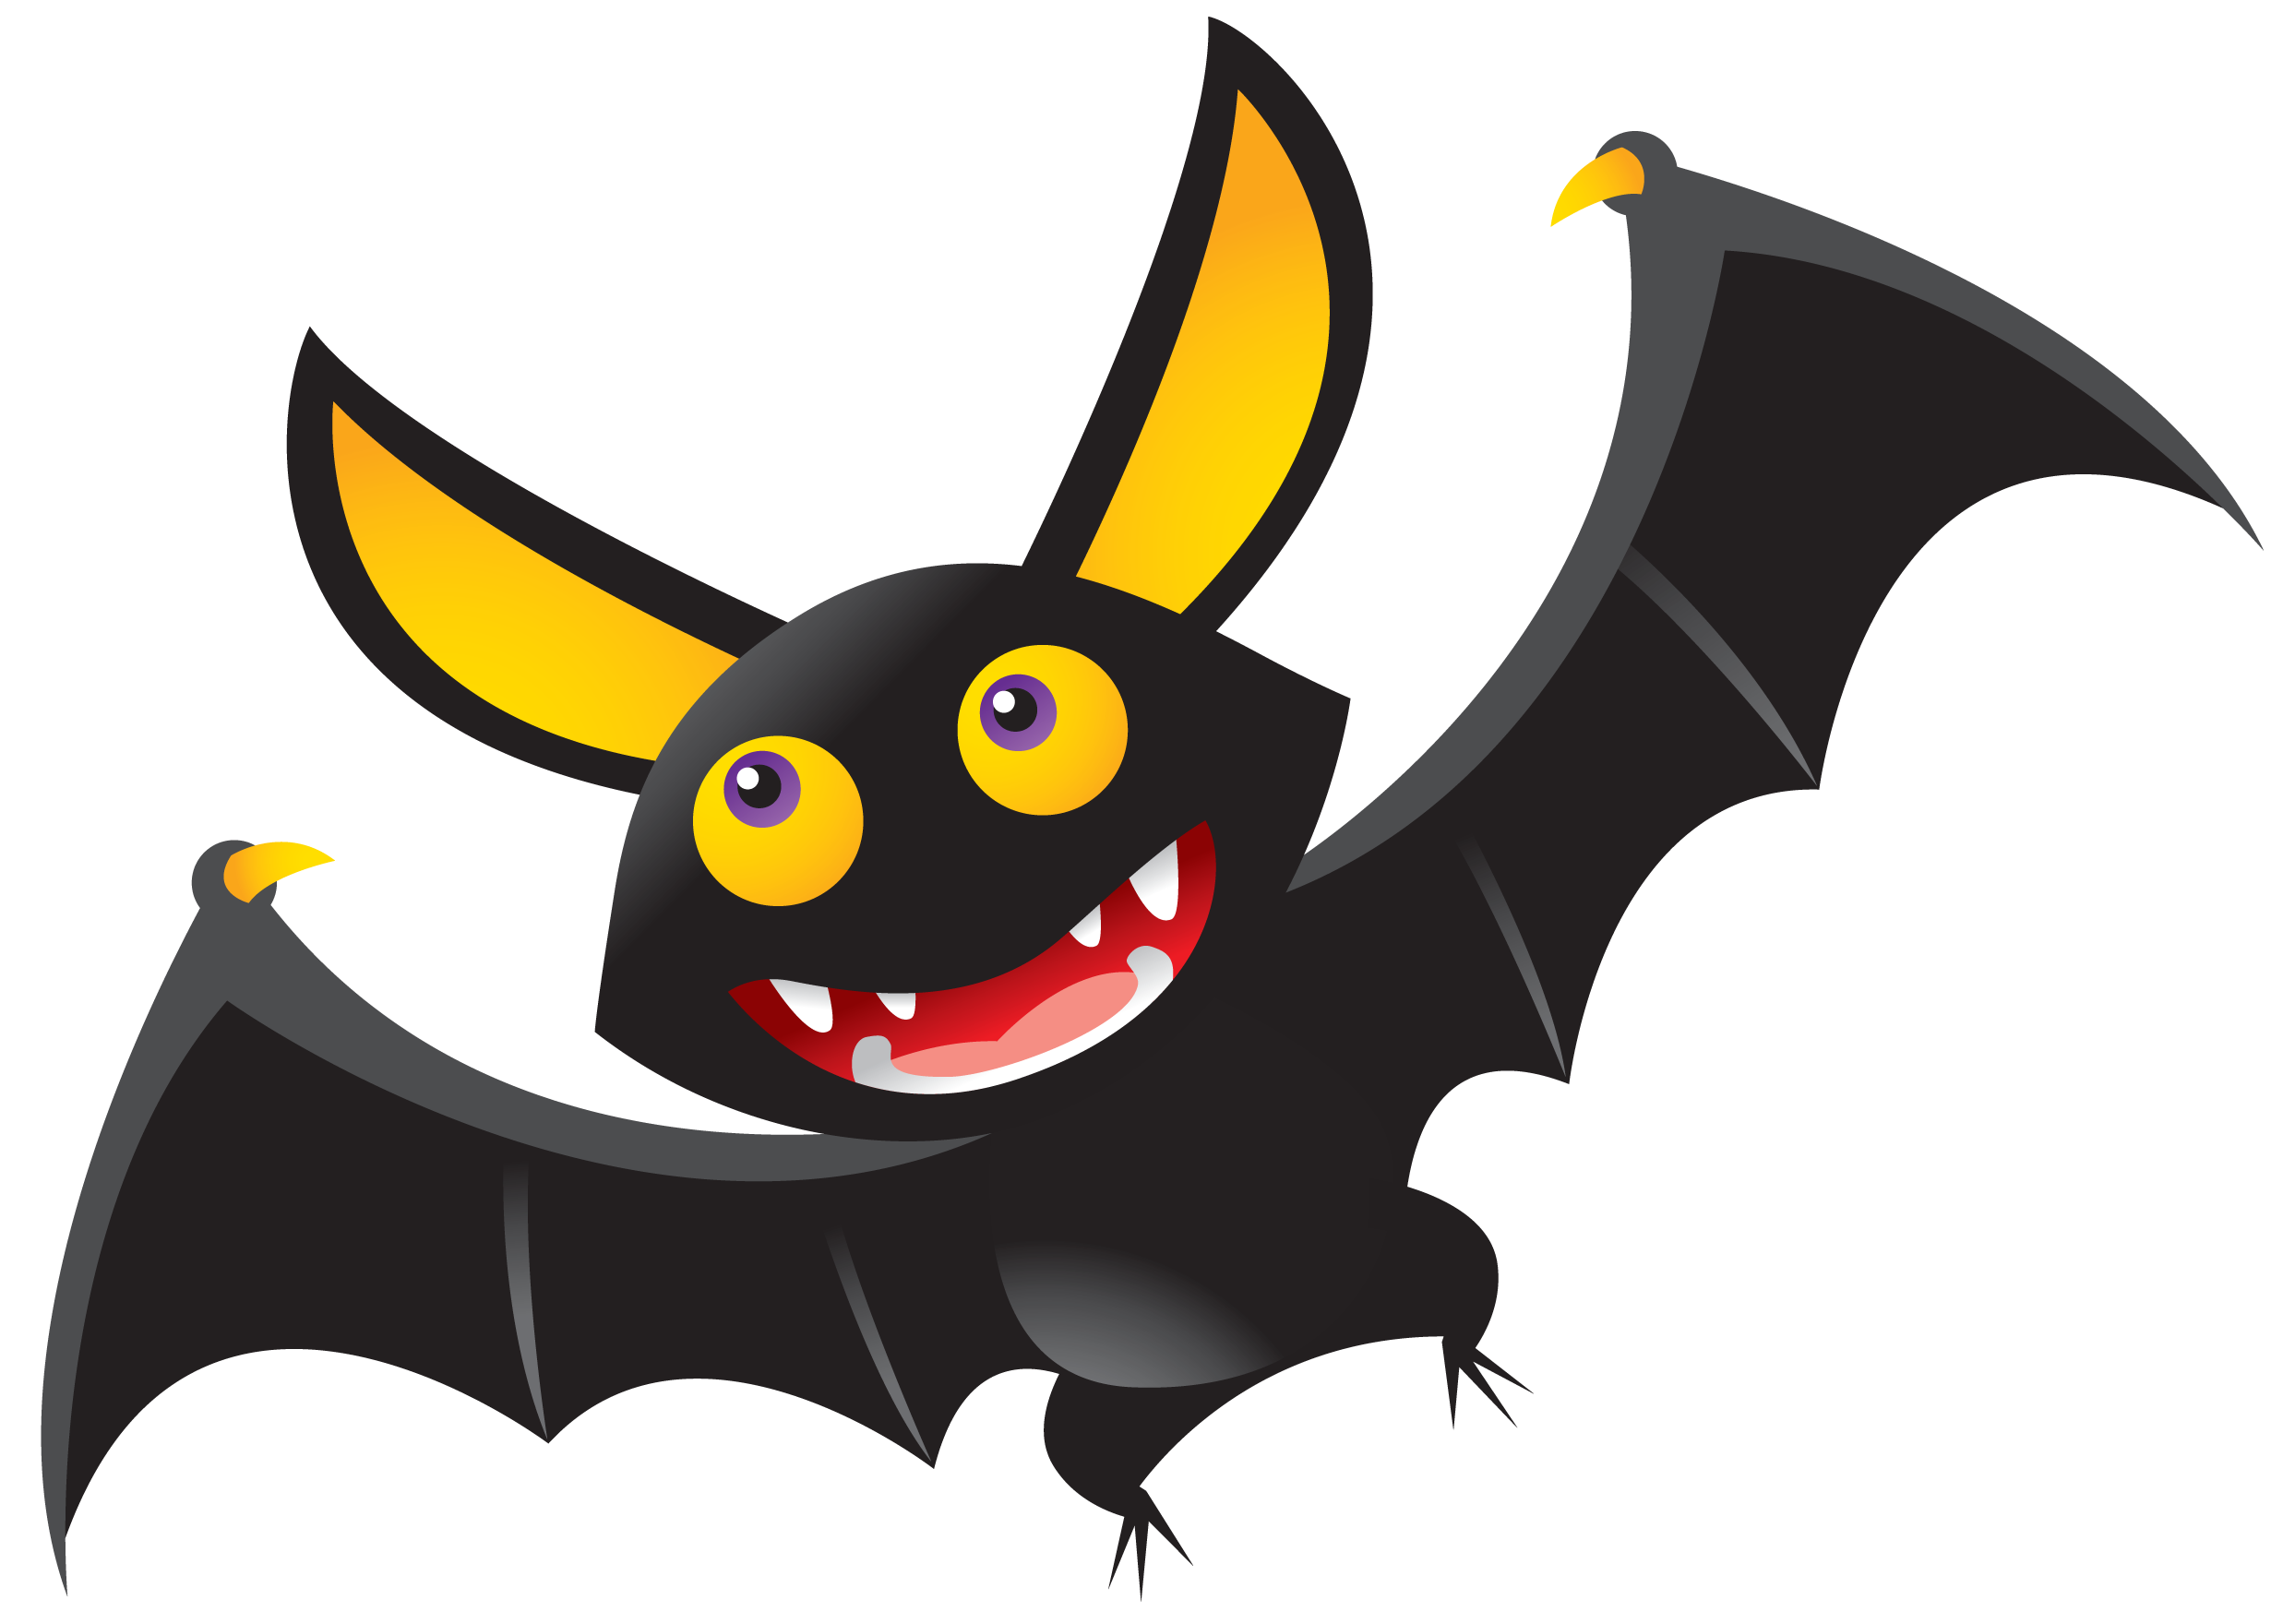 Cute Bat Clipart